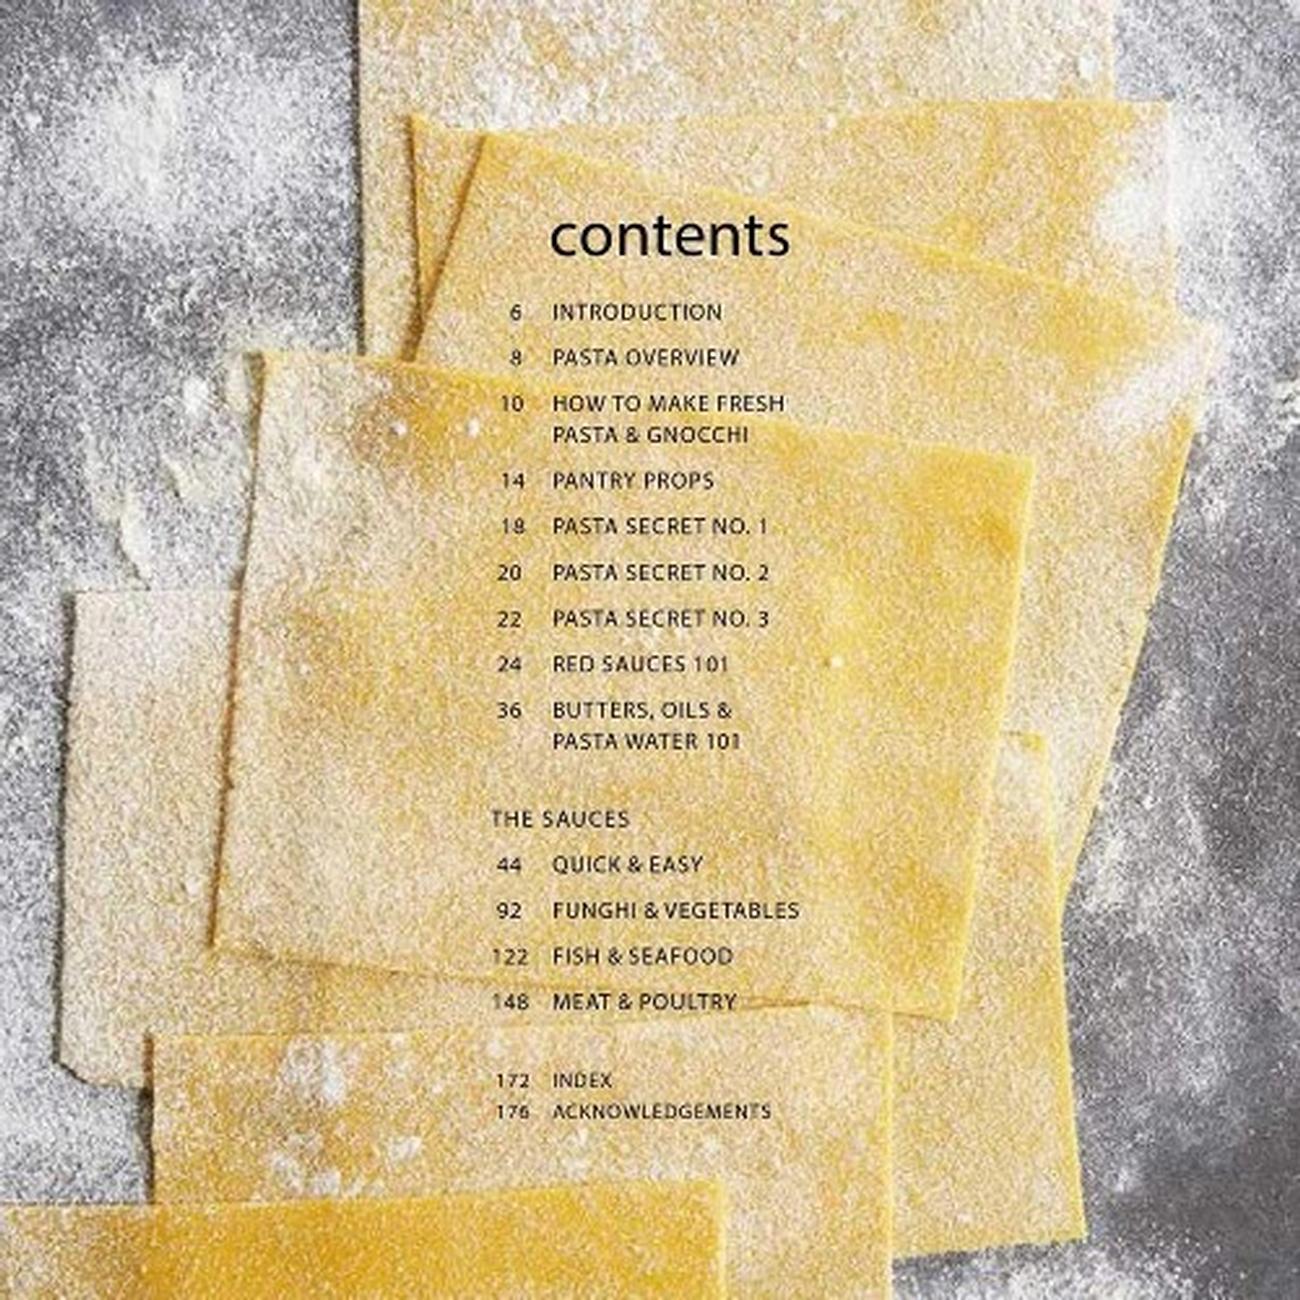 pasta-perfect-laura-santini-cookbook - Pasta Perfect by Laura Santini